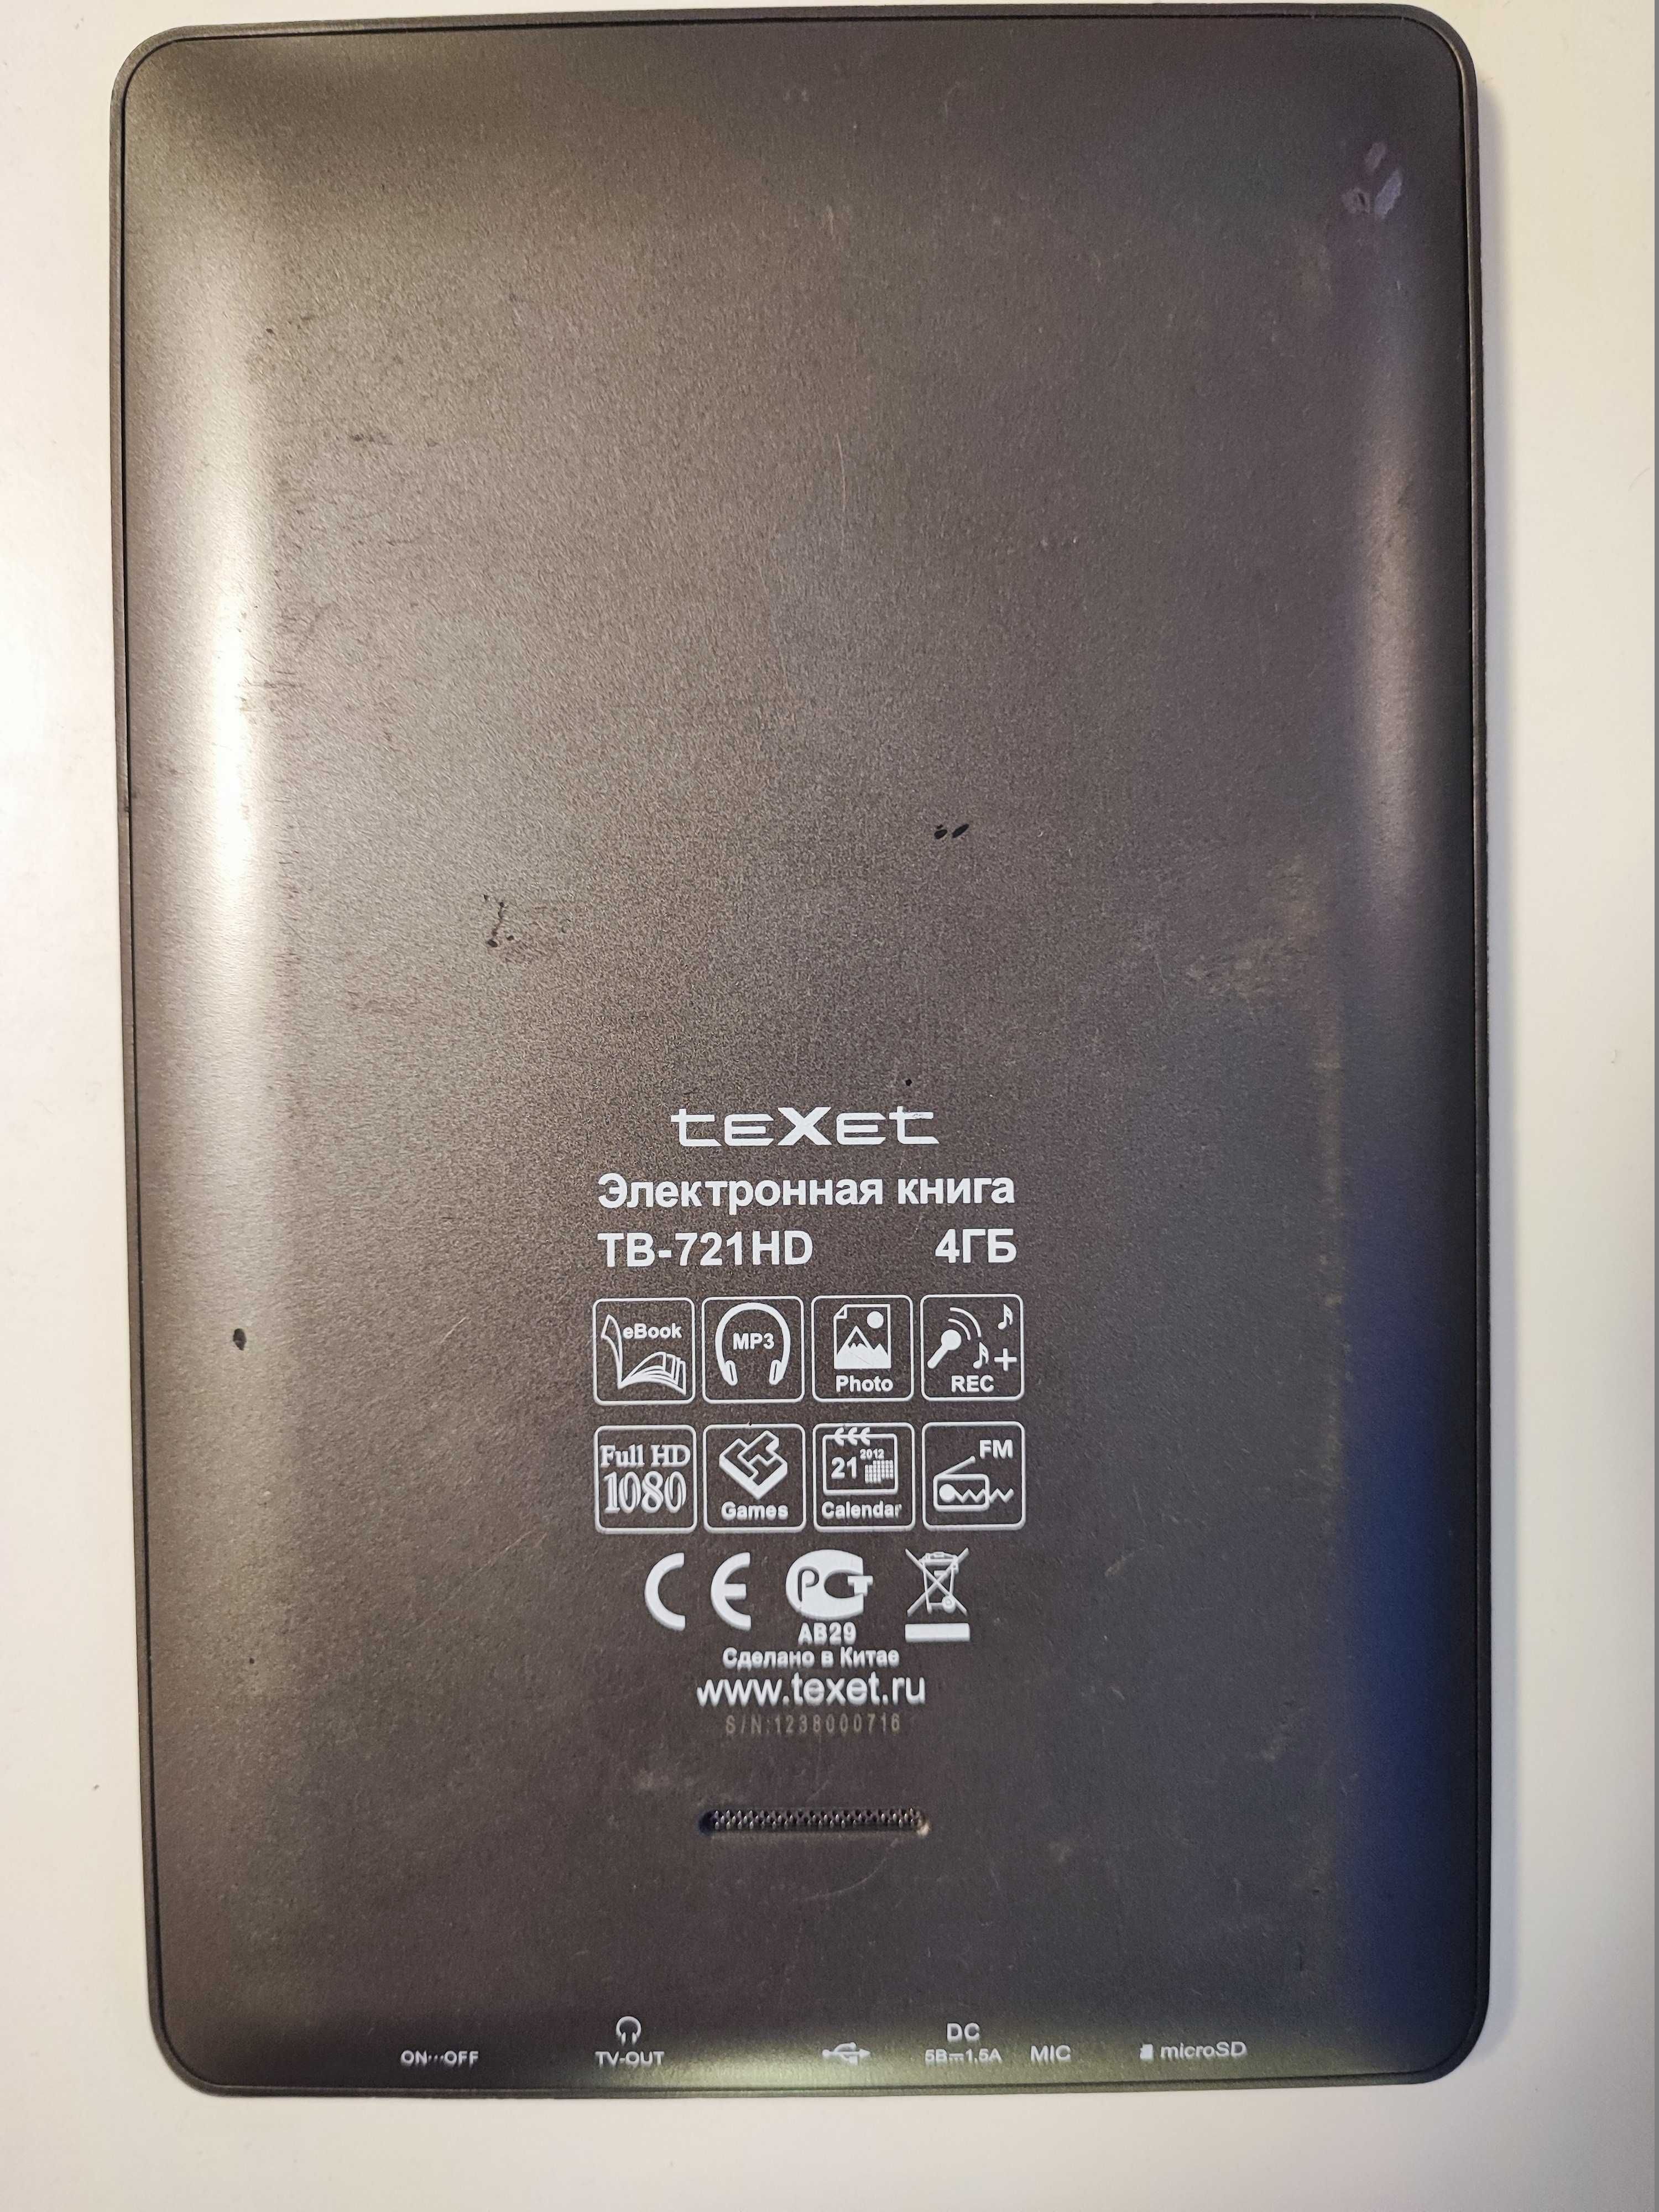 Электронная книга TeXet TB-721HD 4Gb отличное состояние